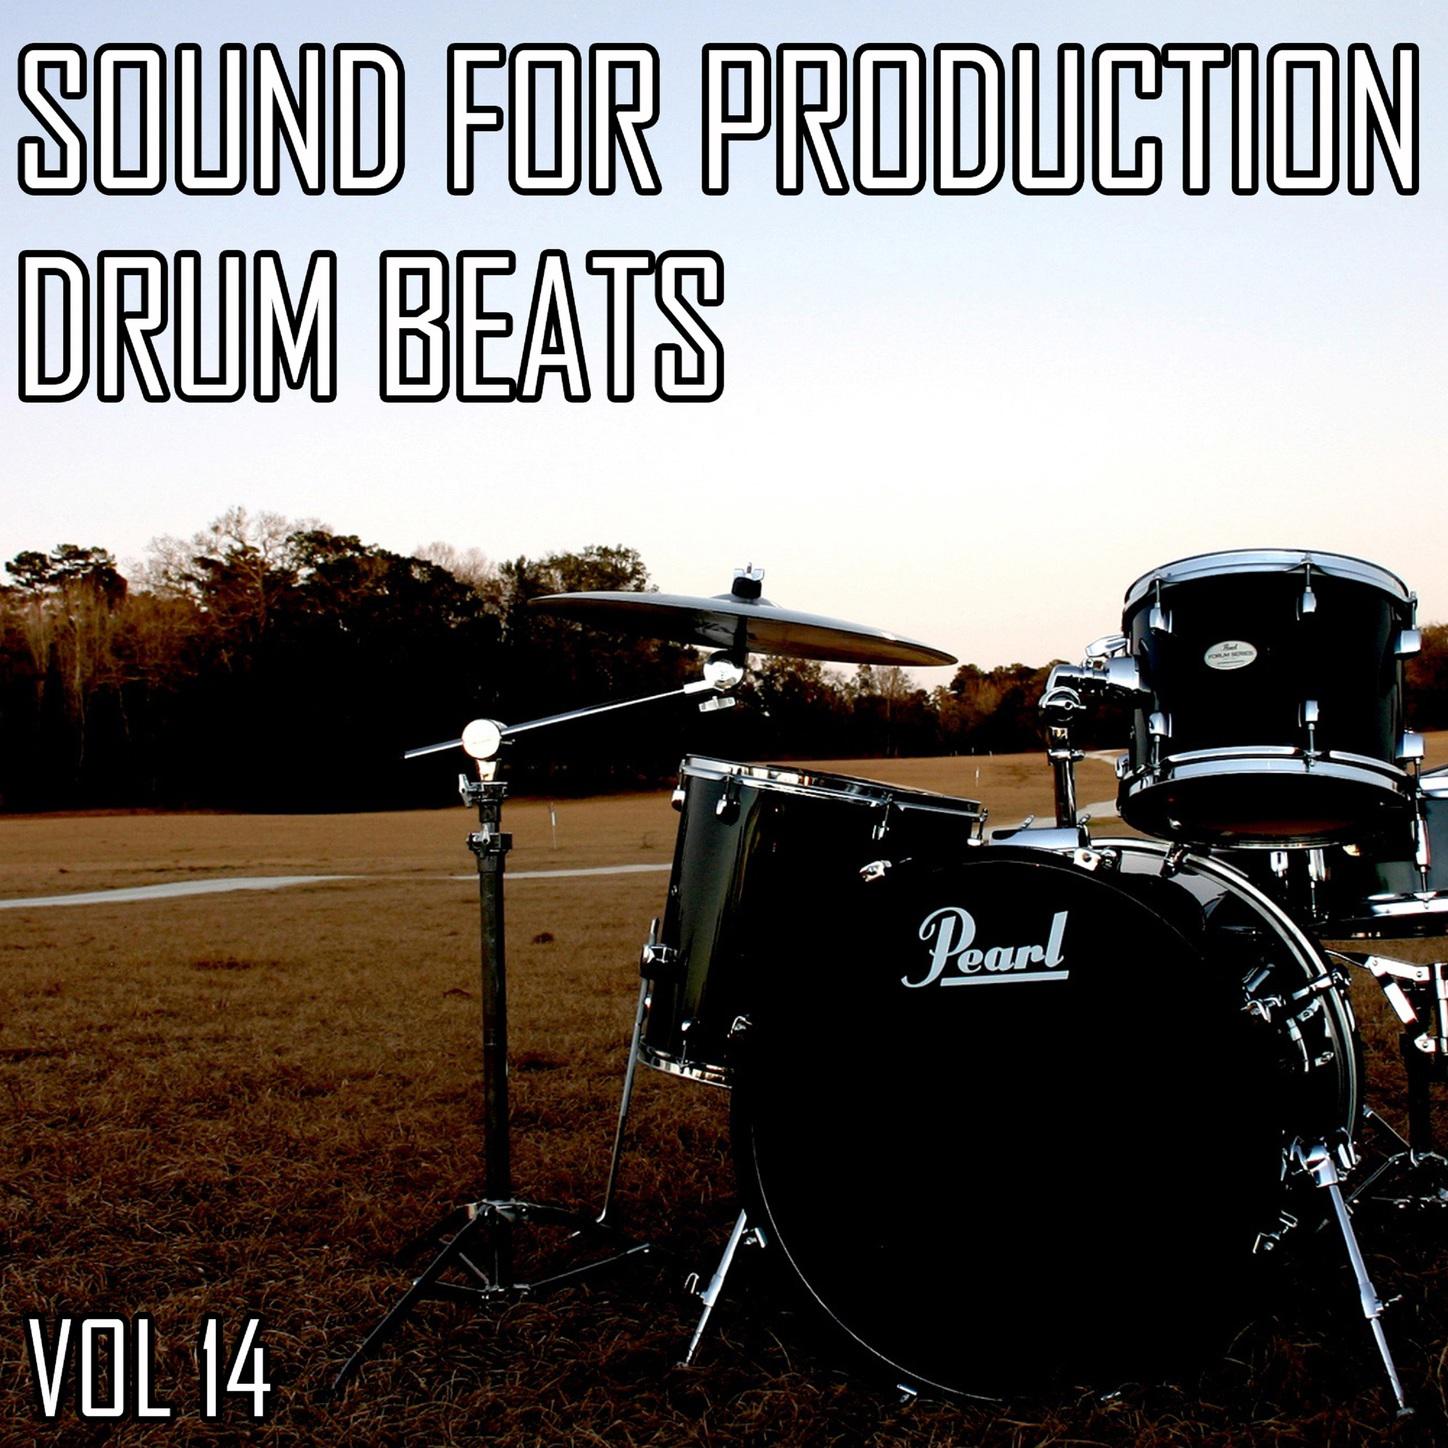 Sound For Production Drum Beats, Vol. 14